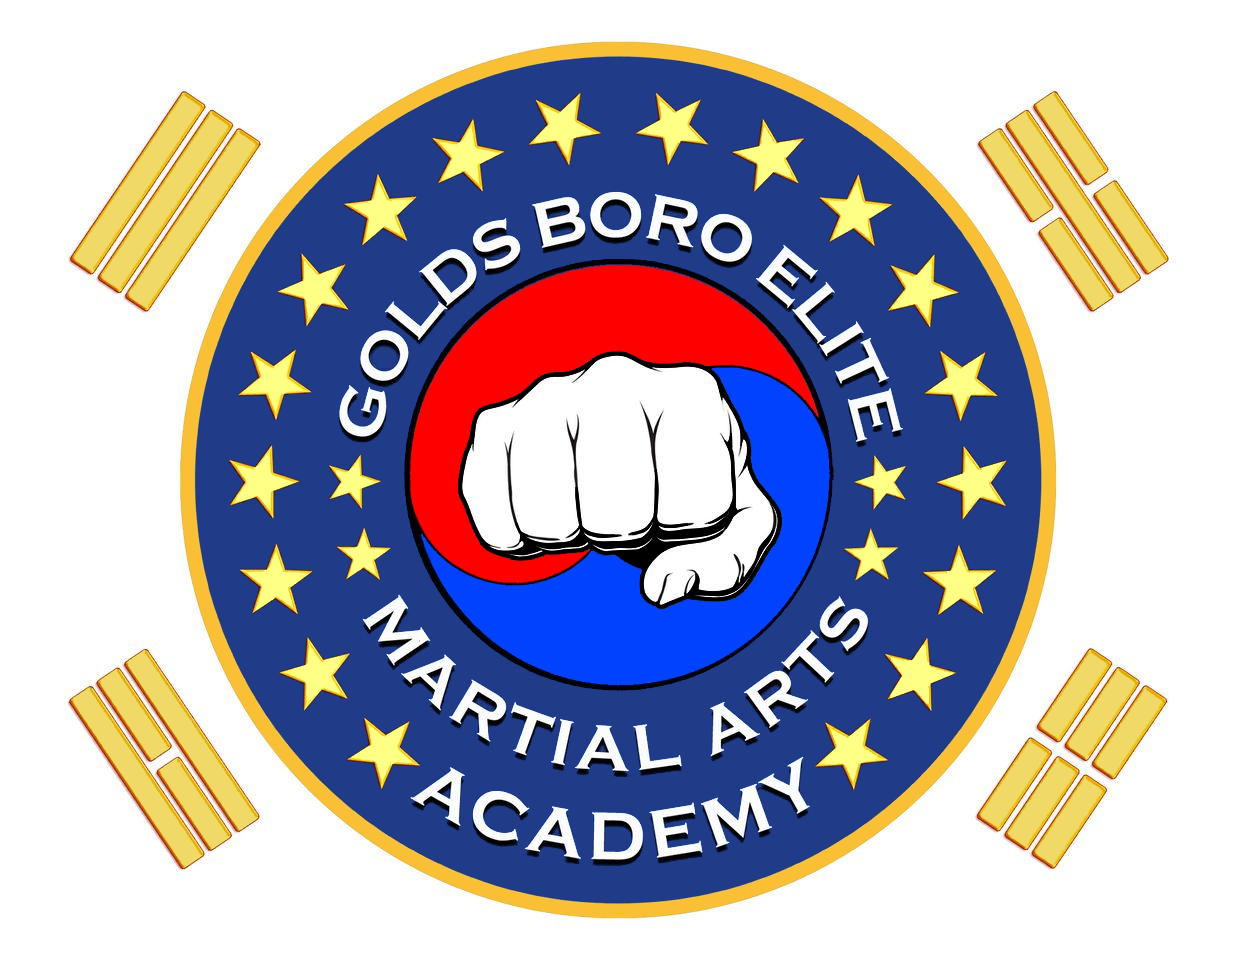 Goldsboro Elite Martial Arts Academy